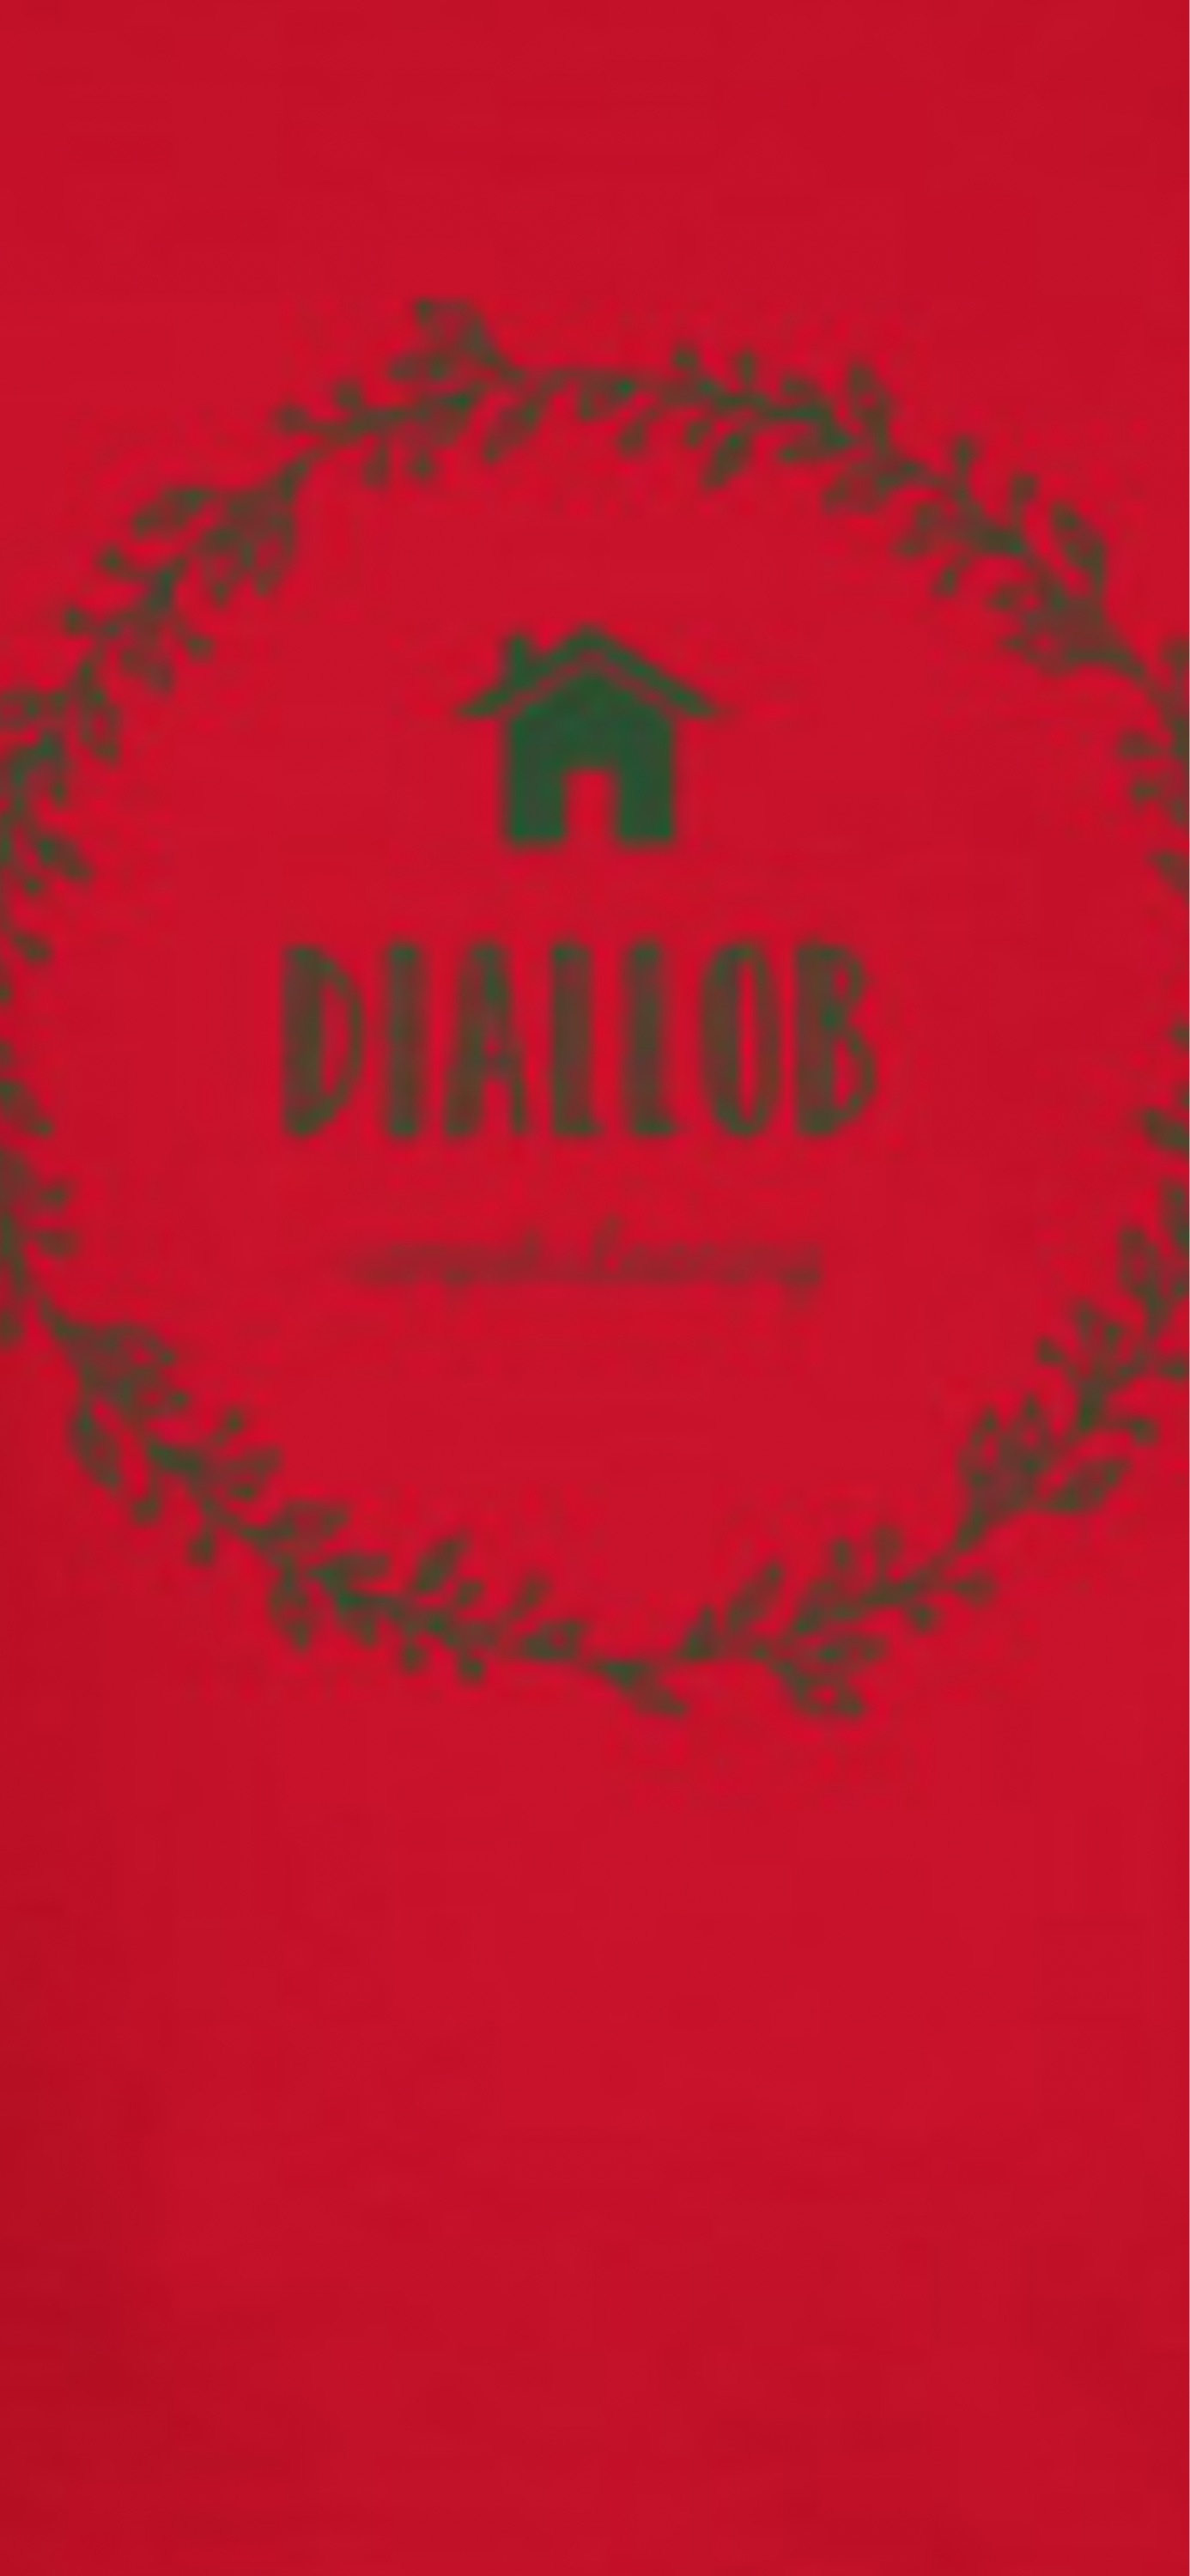 Diallob Carpet Cleaning Services, LLC Logo